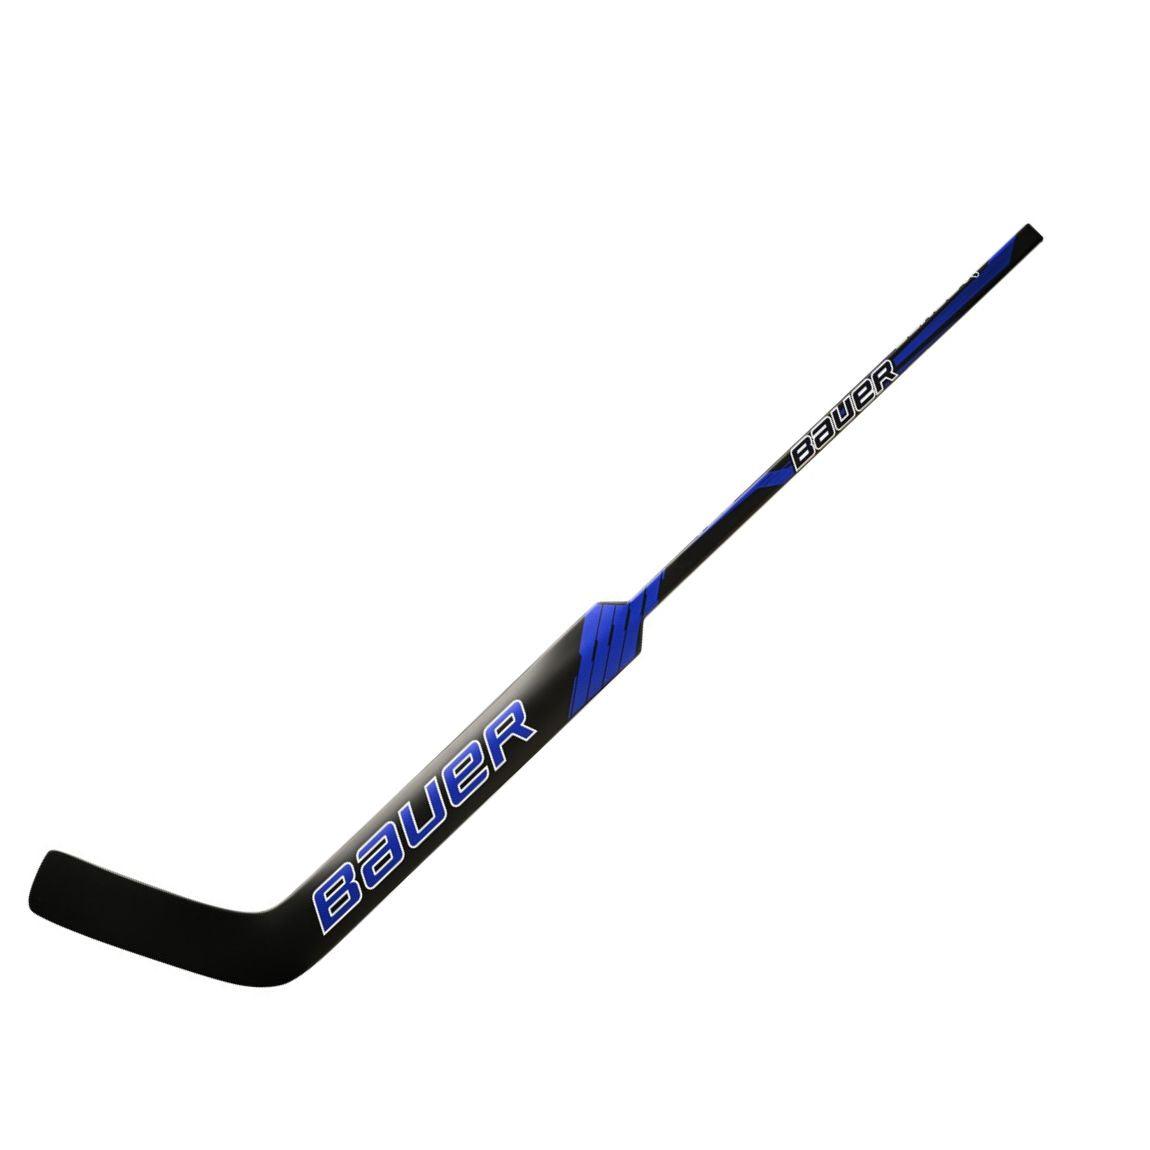 Bauer S23 GSX Goalie Stick - Intermediate - Sports Excellence